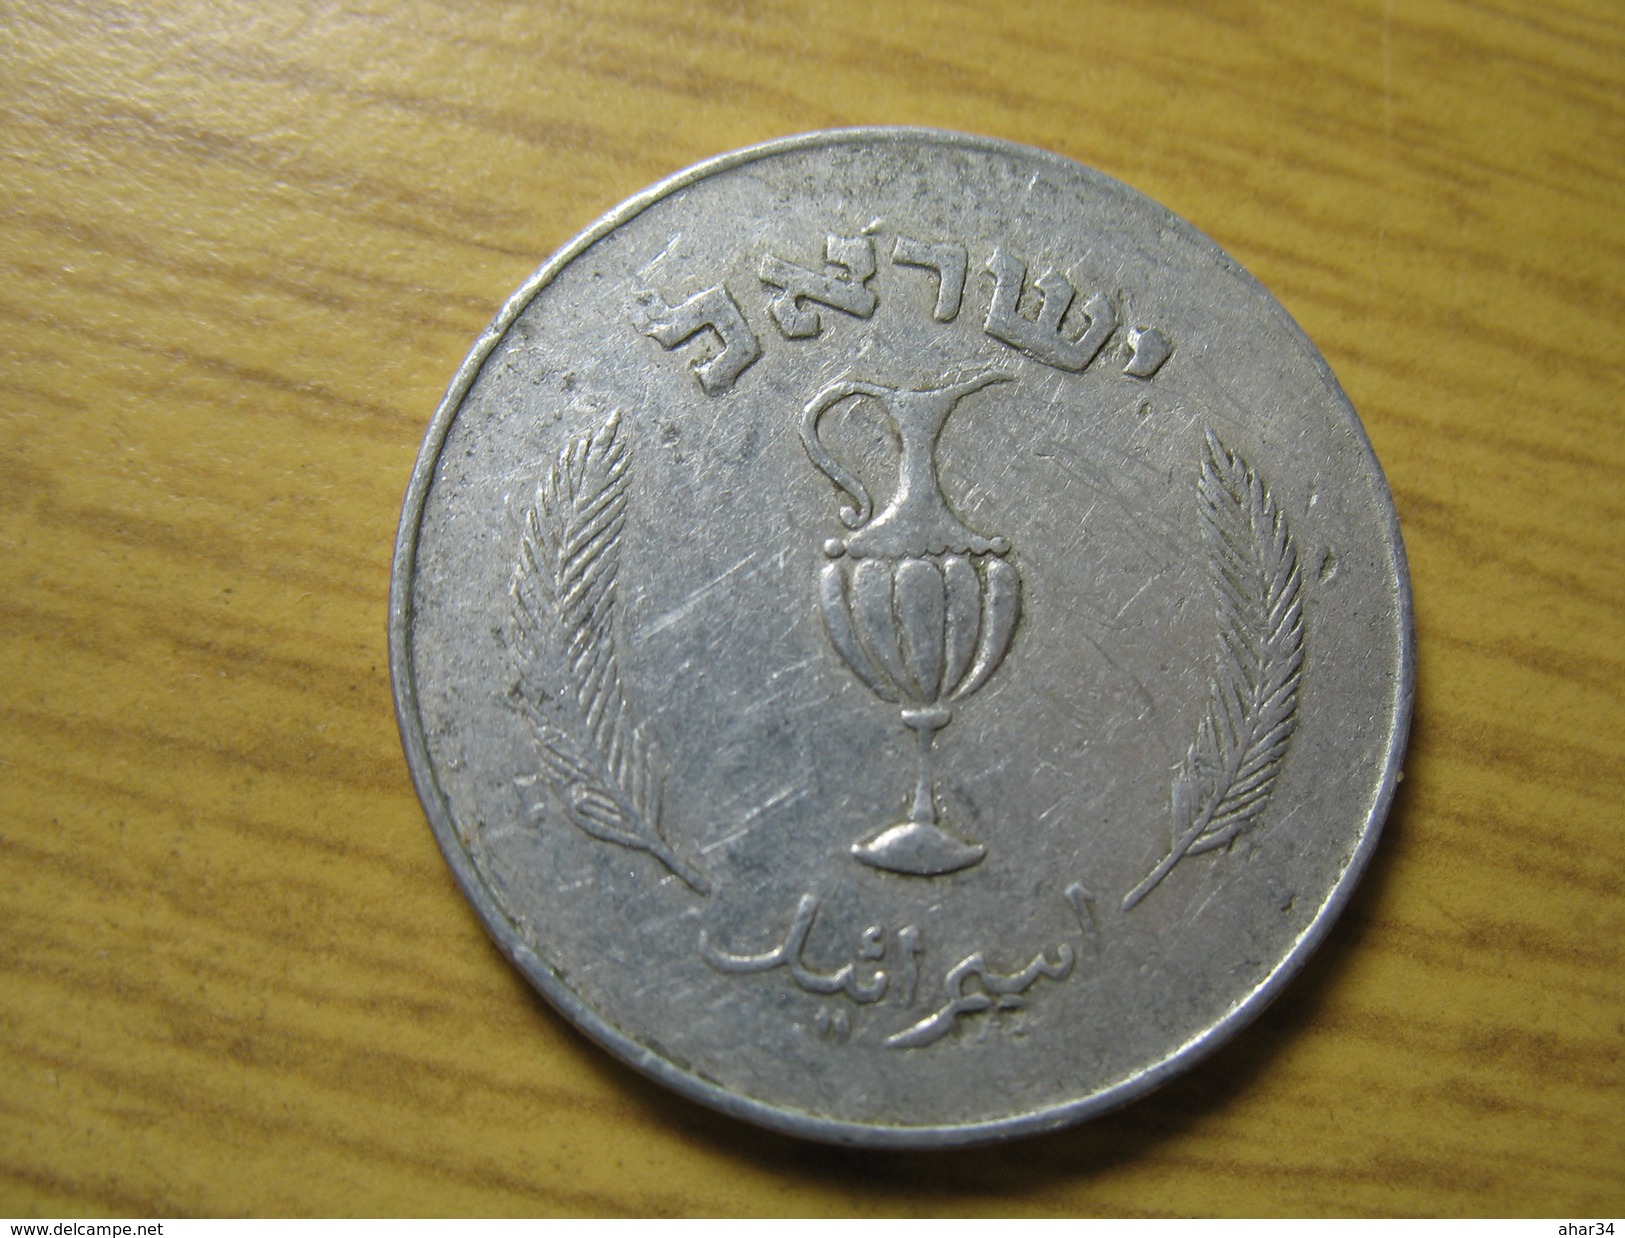 TEMPLATE LISTING ISRAEL 10 PRUTA PRUTAH PRUTOT  1957 RARE  תשי"ז ONLY 1 COIN. - Israël